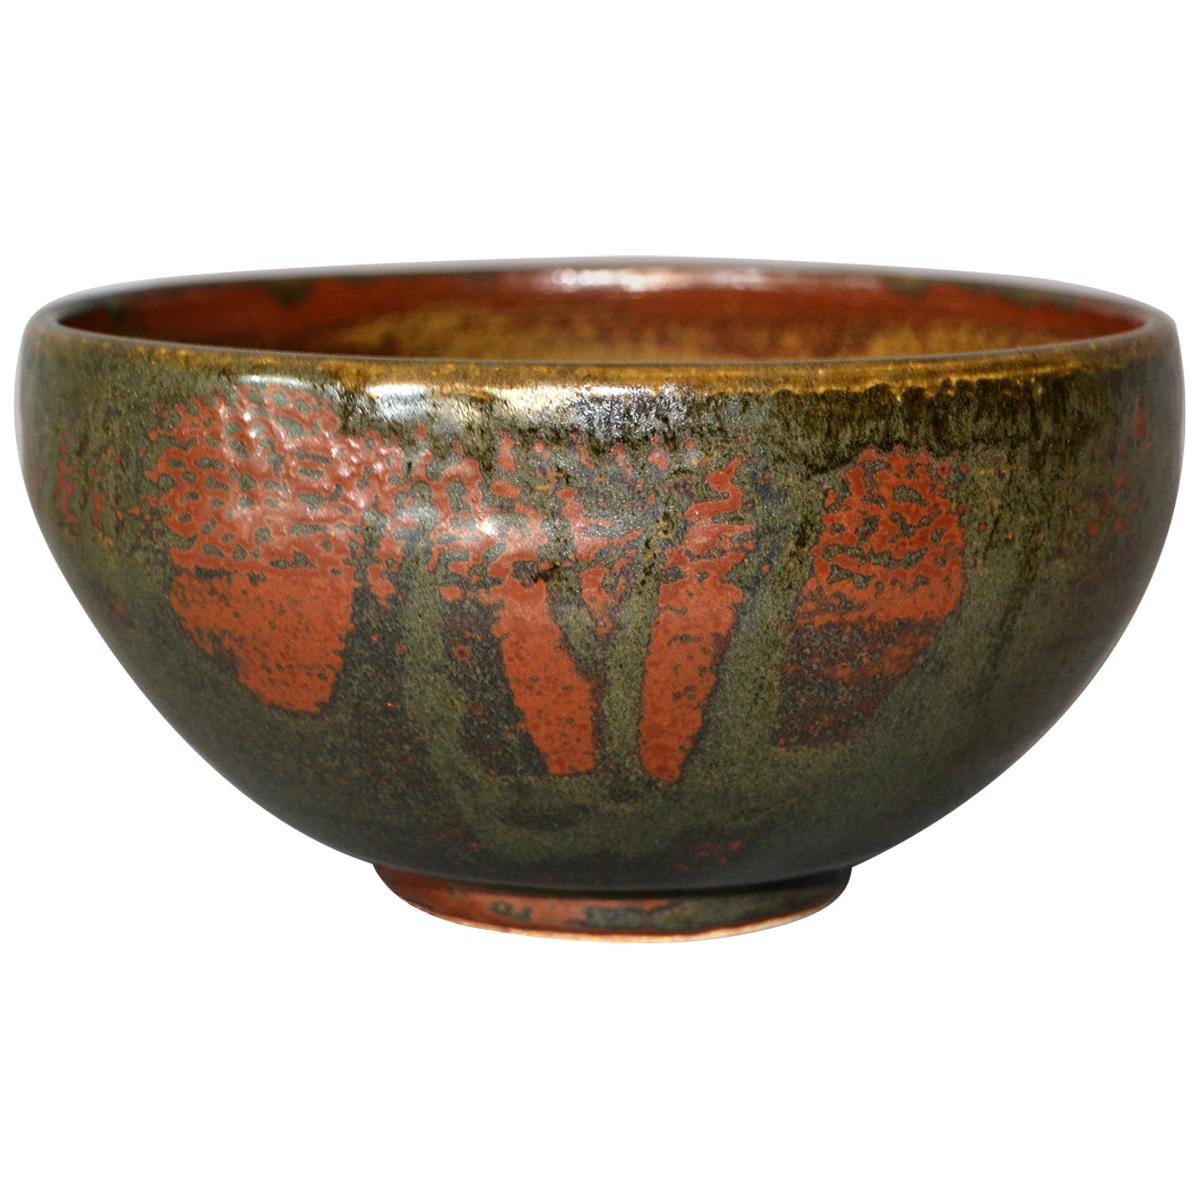 Vintage Scandinavian Modern Art Pottery Ceramic Decorative Bowl Brown and Bronze